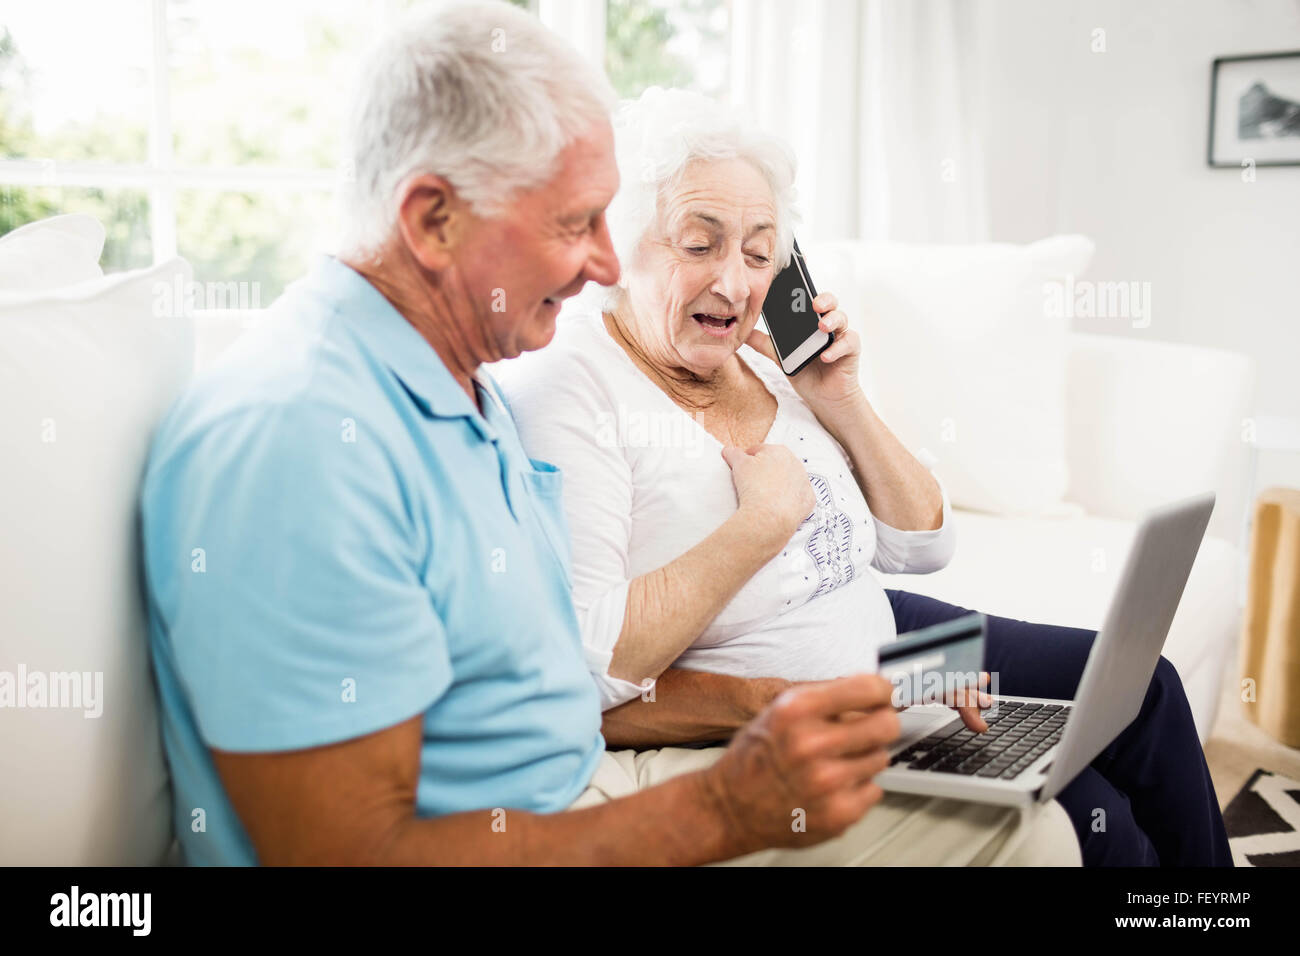 Lächelnde älteres Paar mit Laptop und smartphone Stockfoto